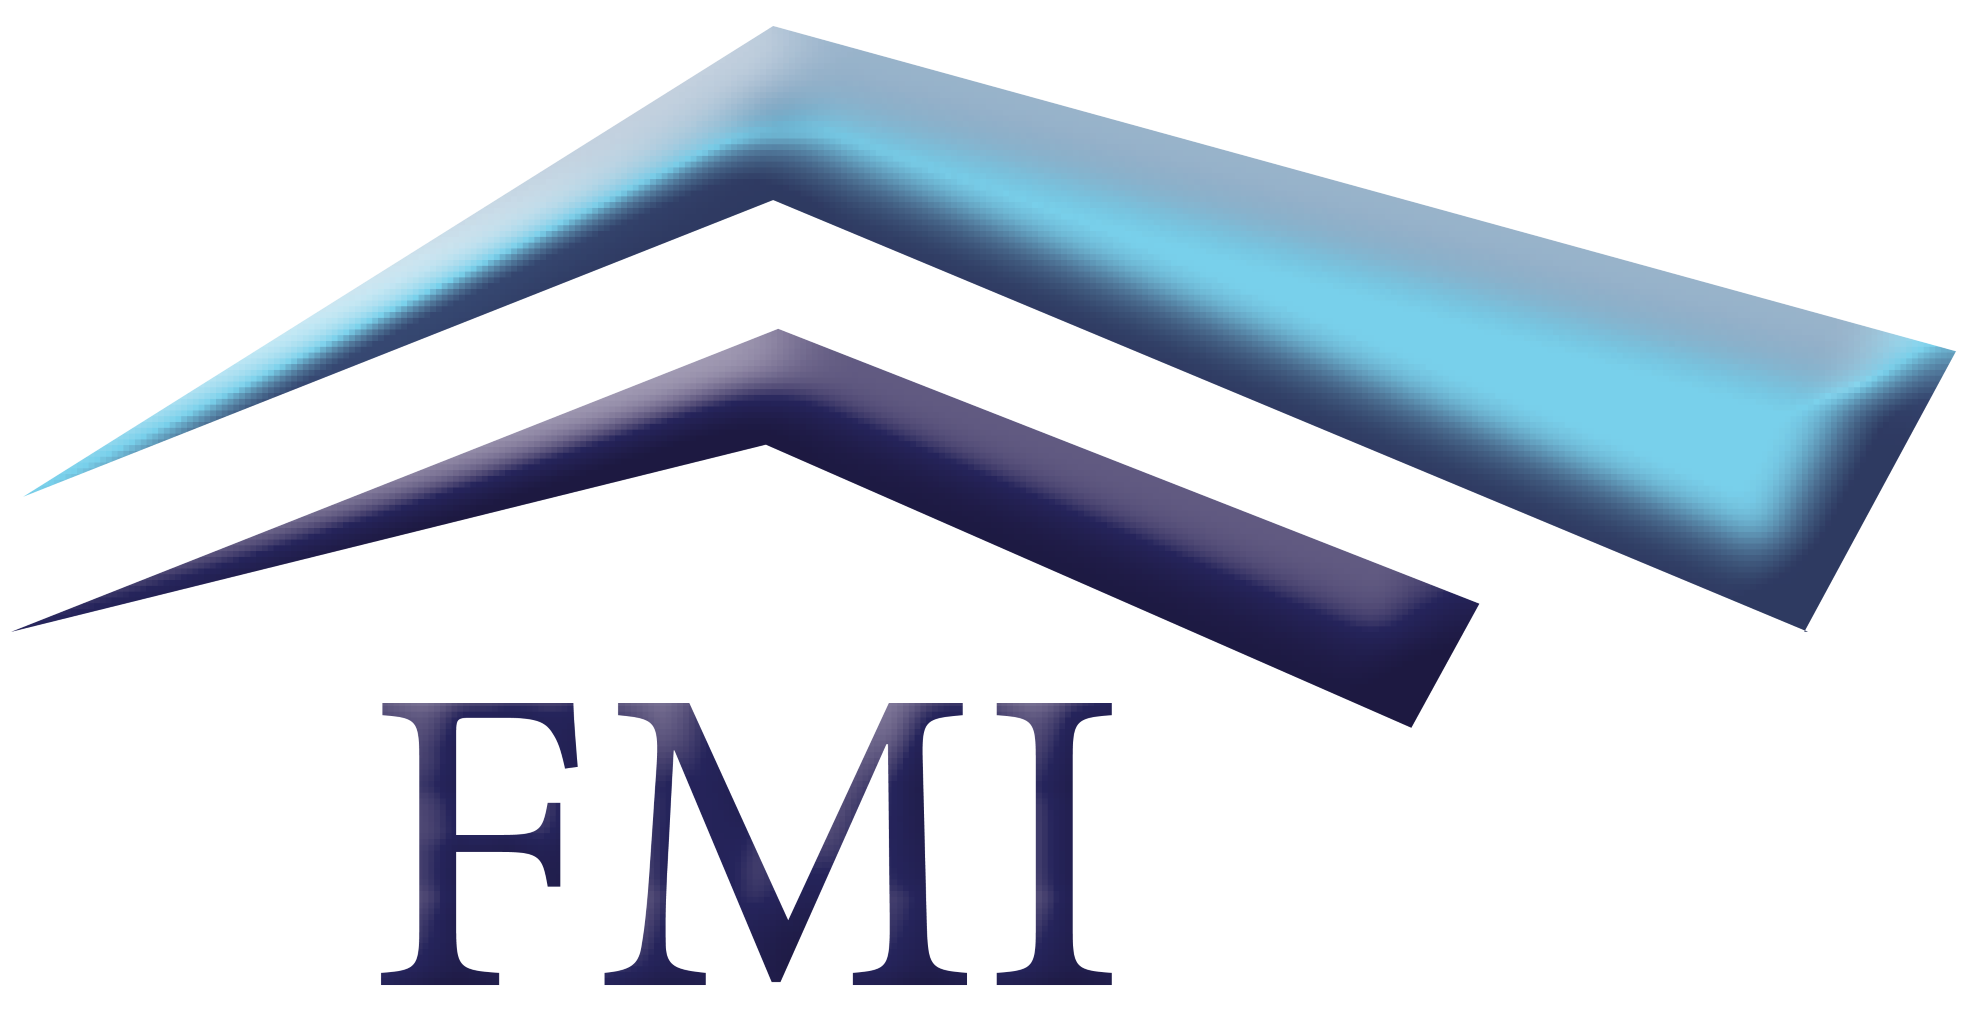 FMI ("Froude Management Inc.") Logo